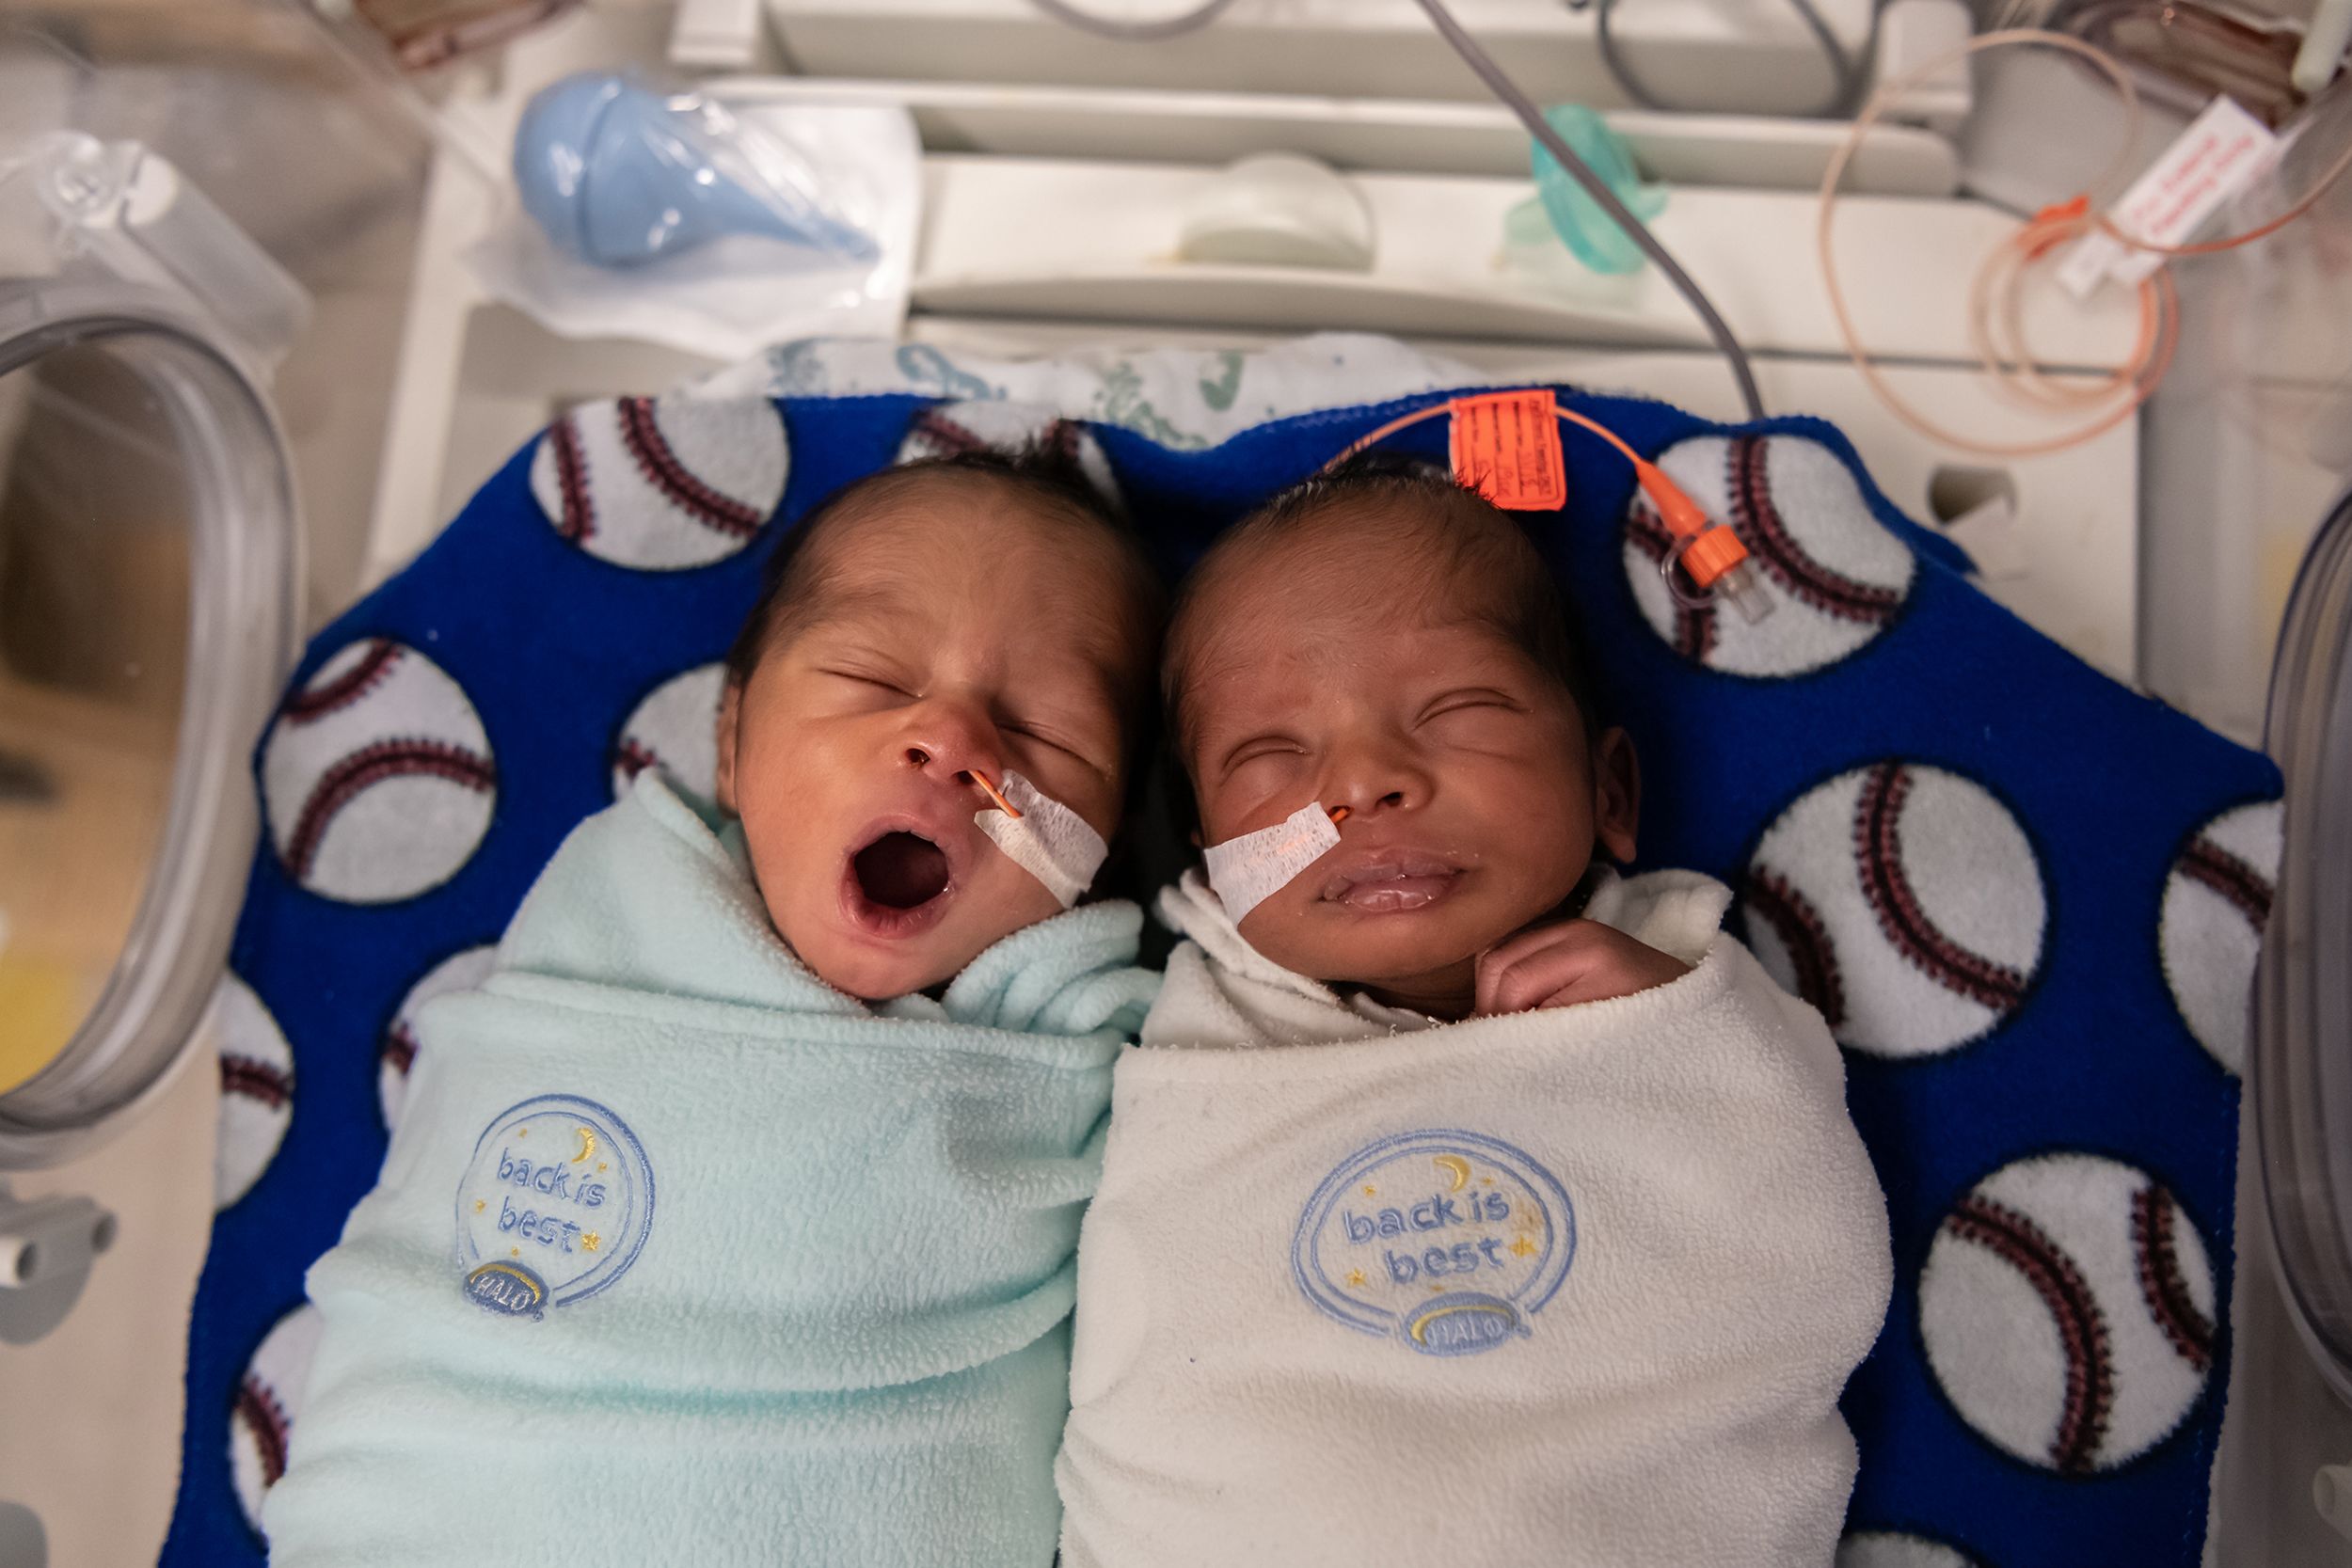 newborn twin babies in hospital